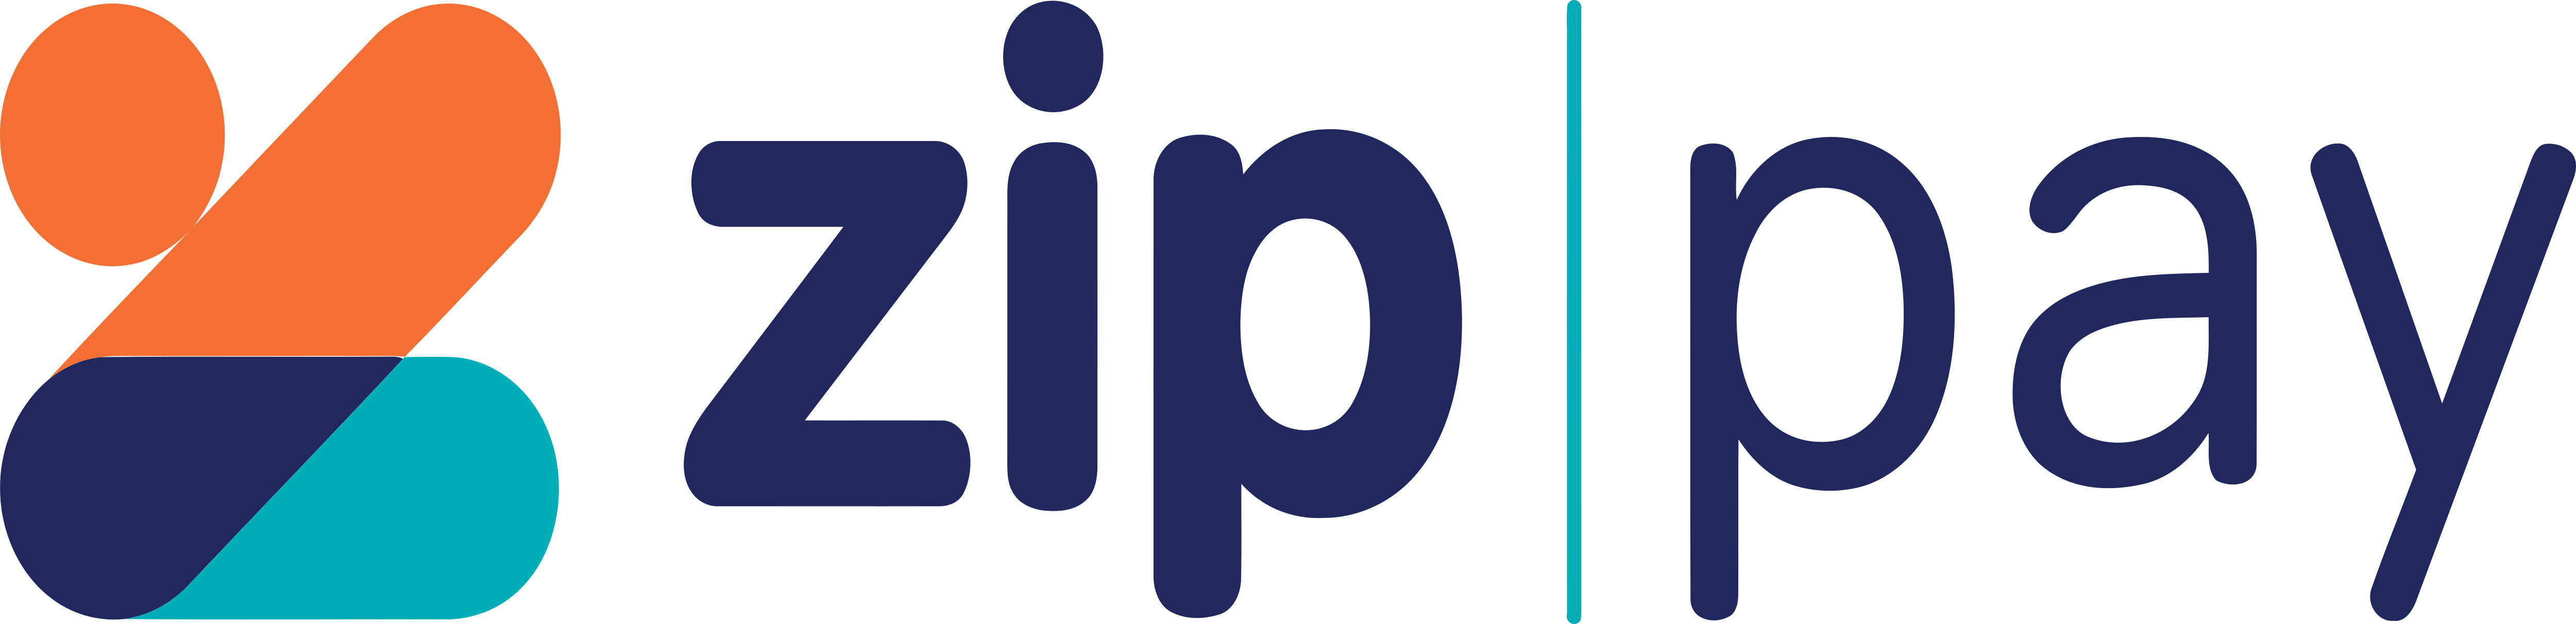 ZipPay Logo